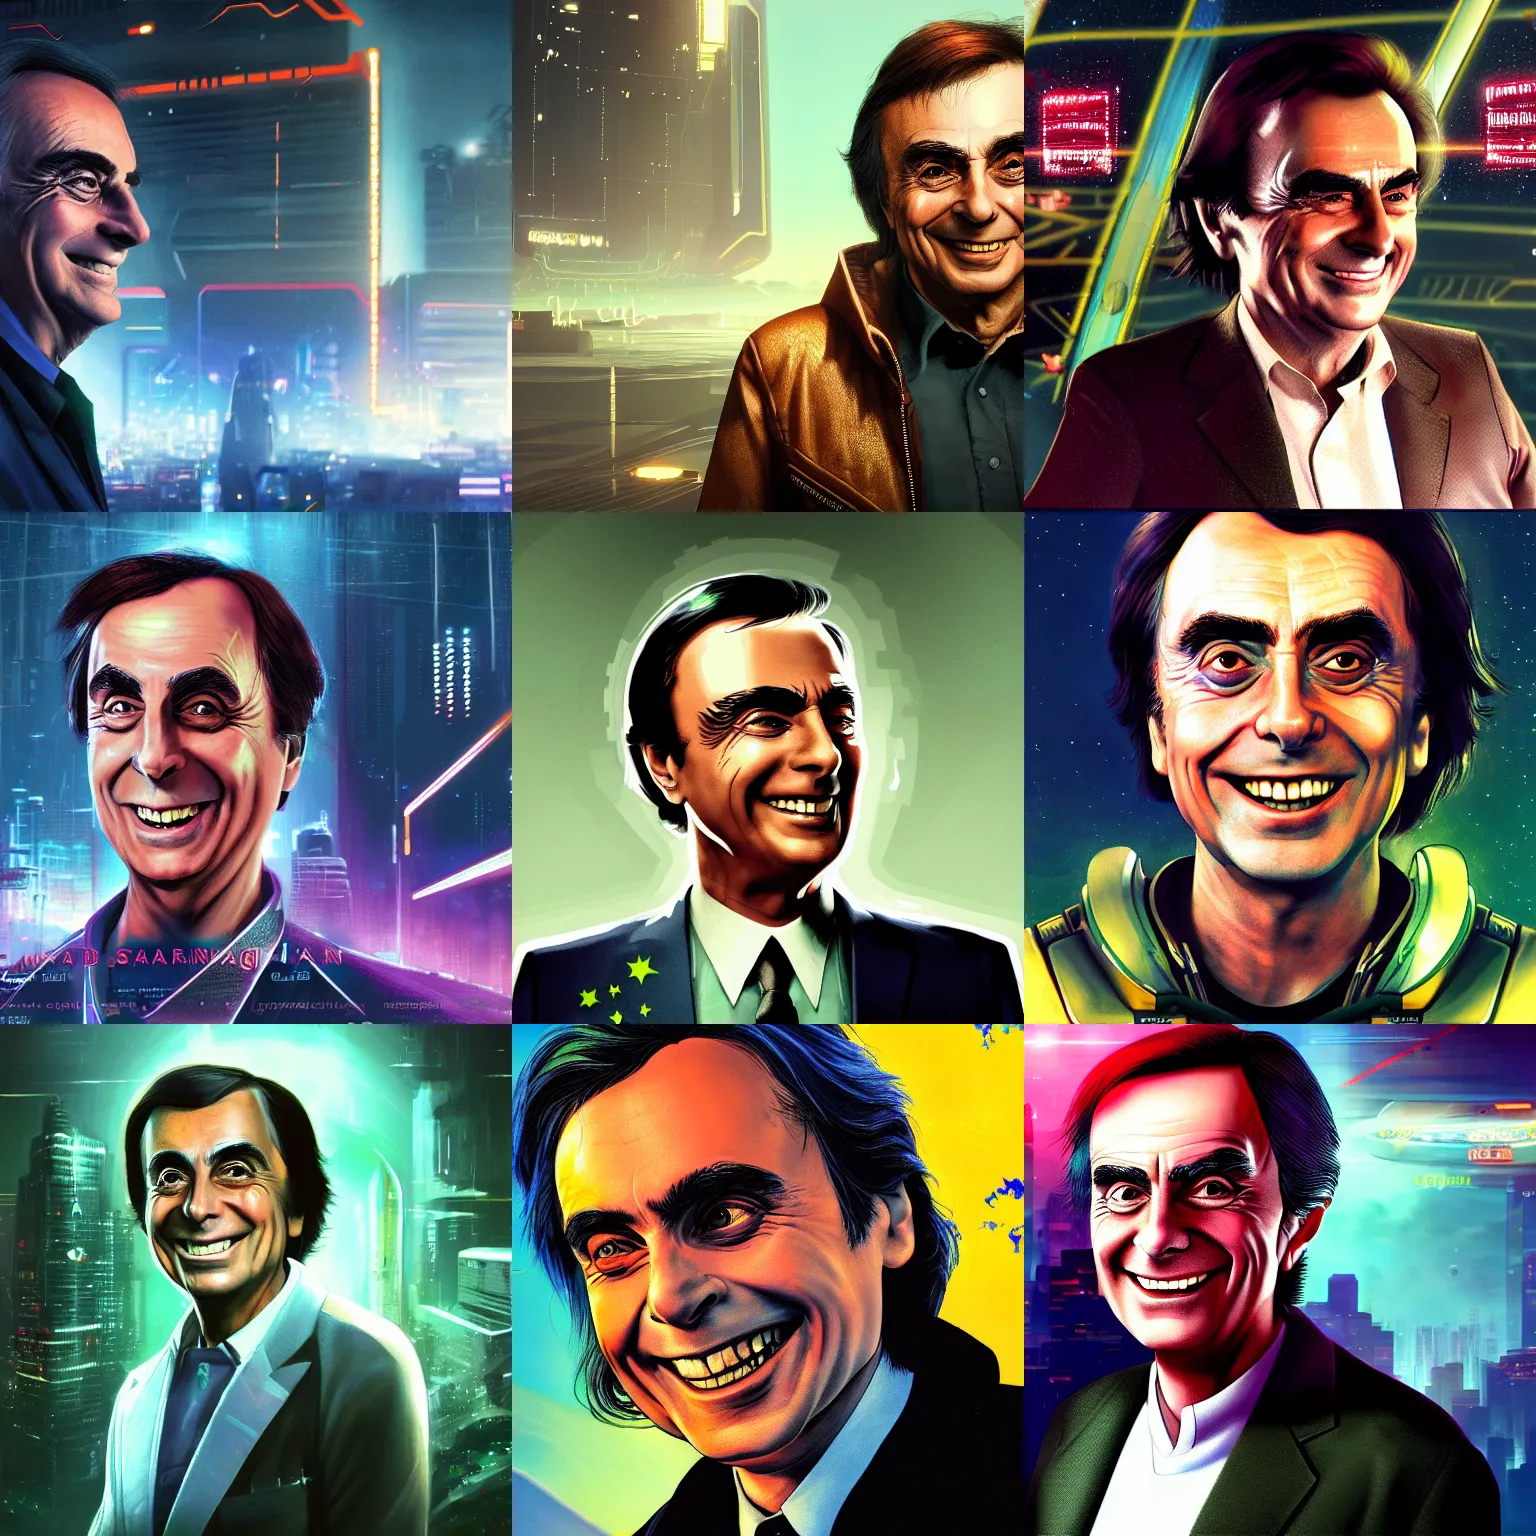 Prompt: smiling carl sagan portrait in cyberpunk 2 0 7 7 3 8 4 0 x 2 1 6 0 cosmos